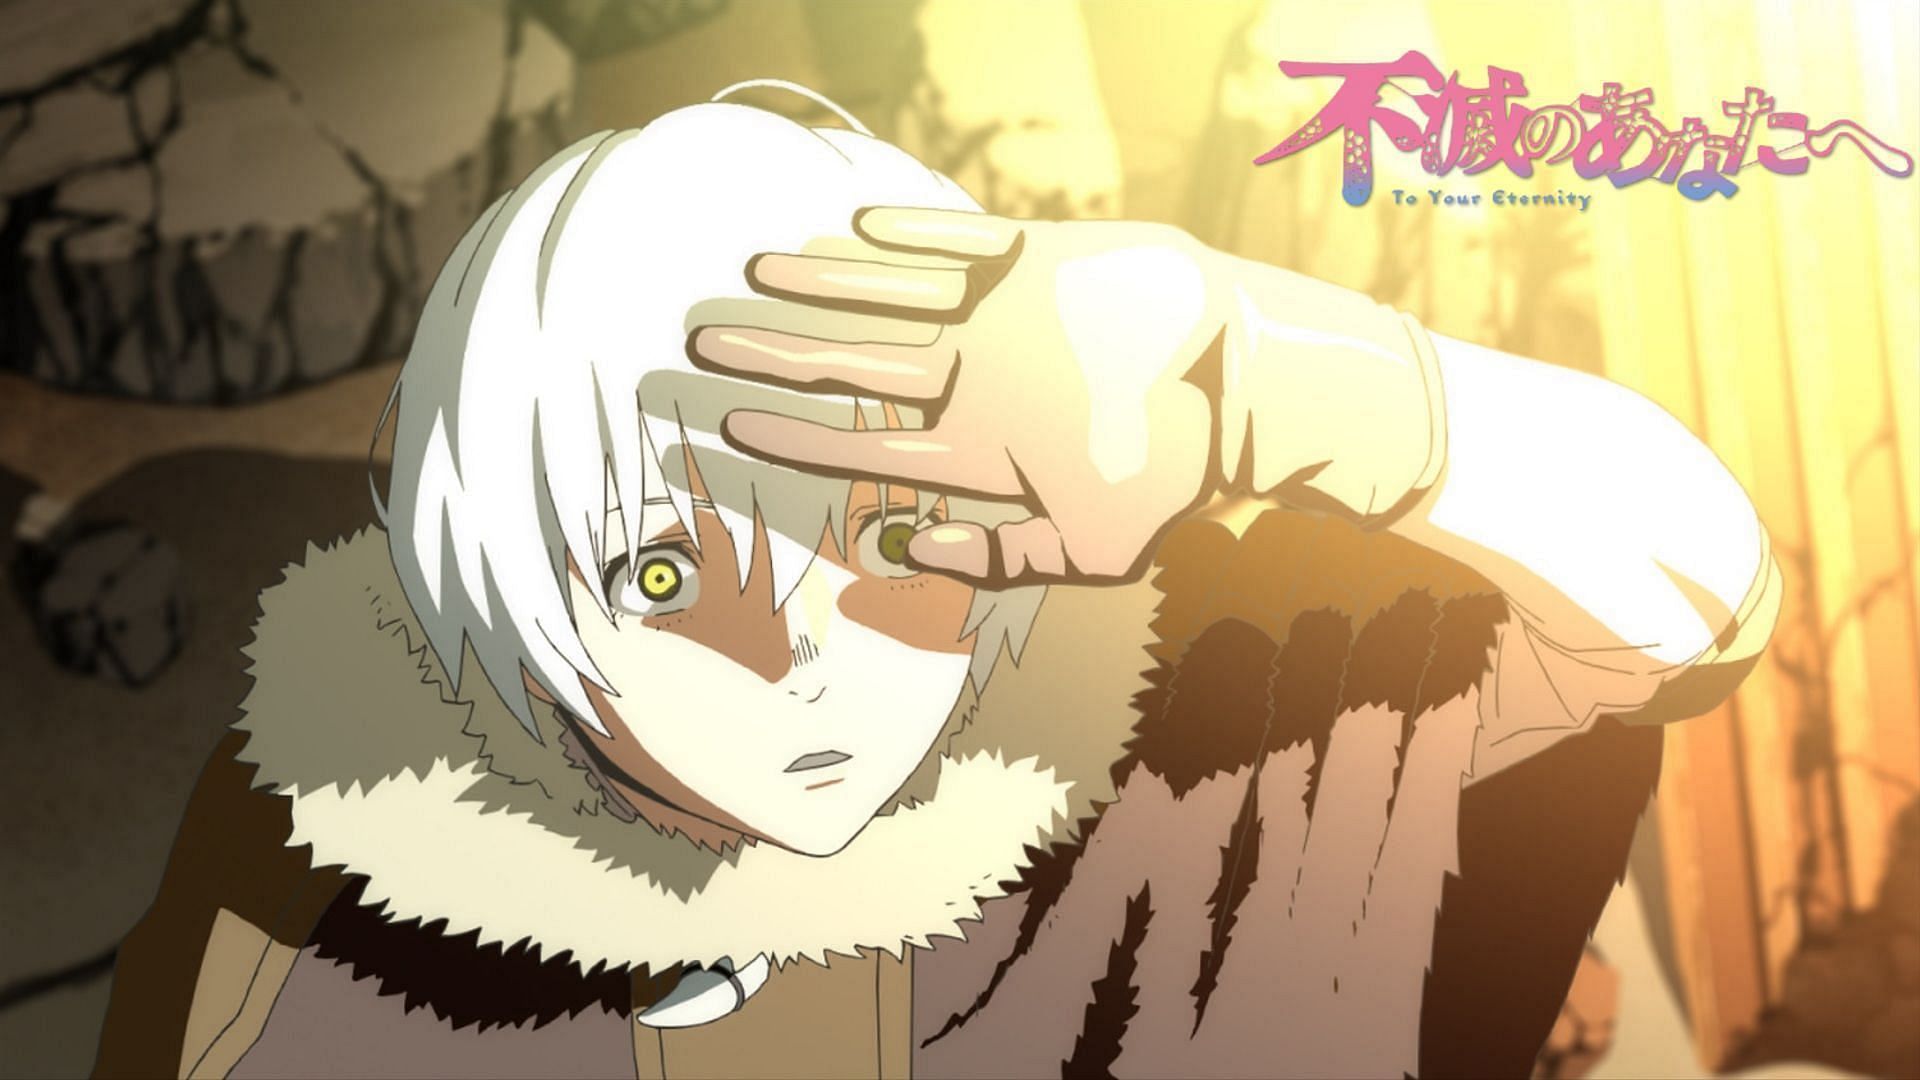 Fushi in the anime (Image via Studio Drive)